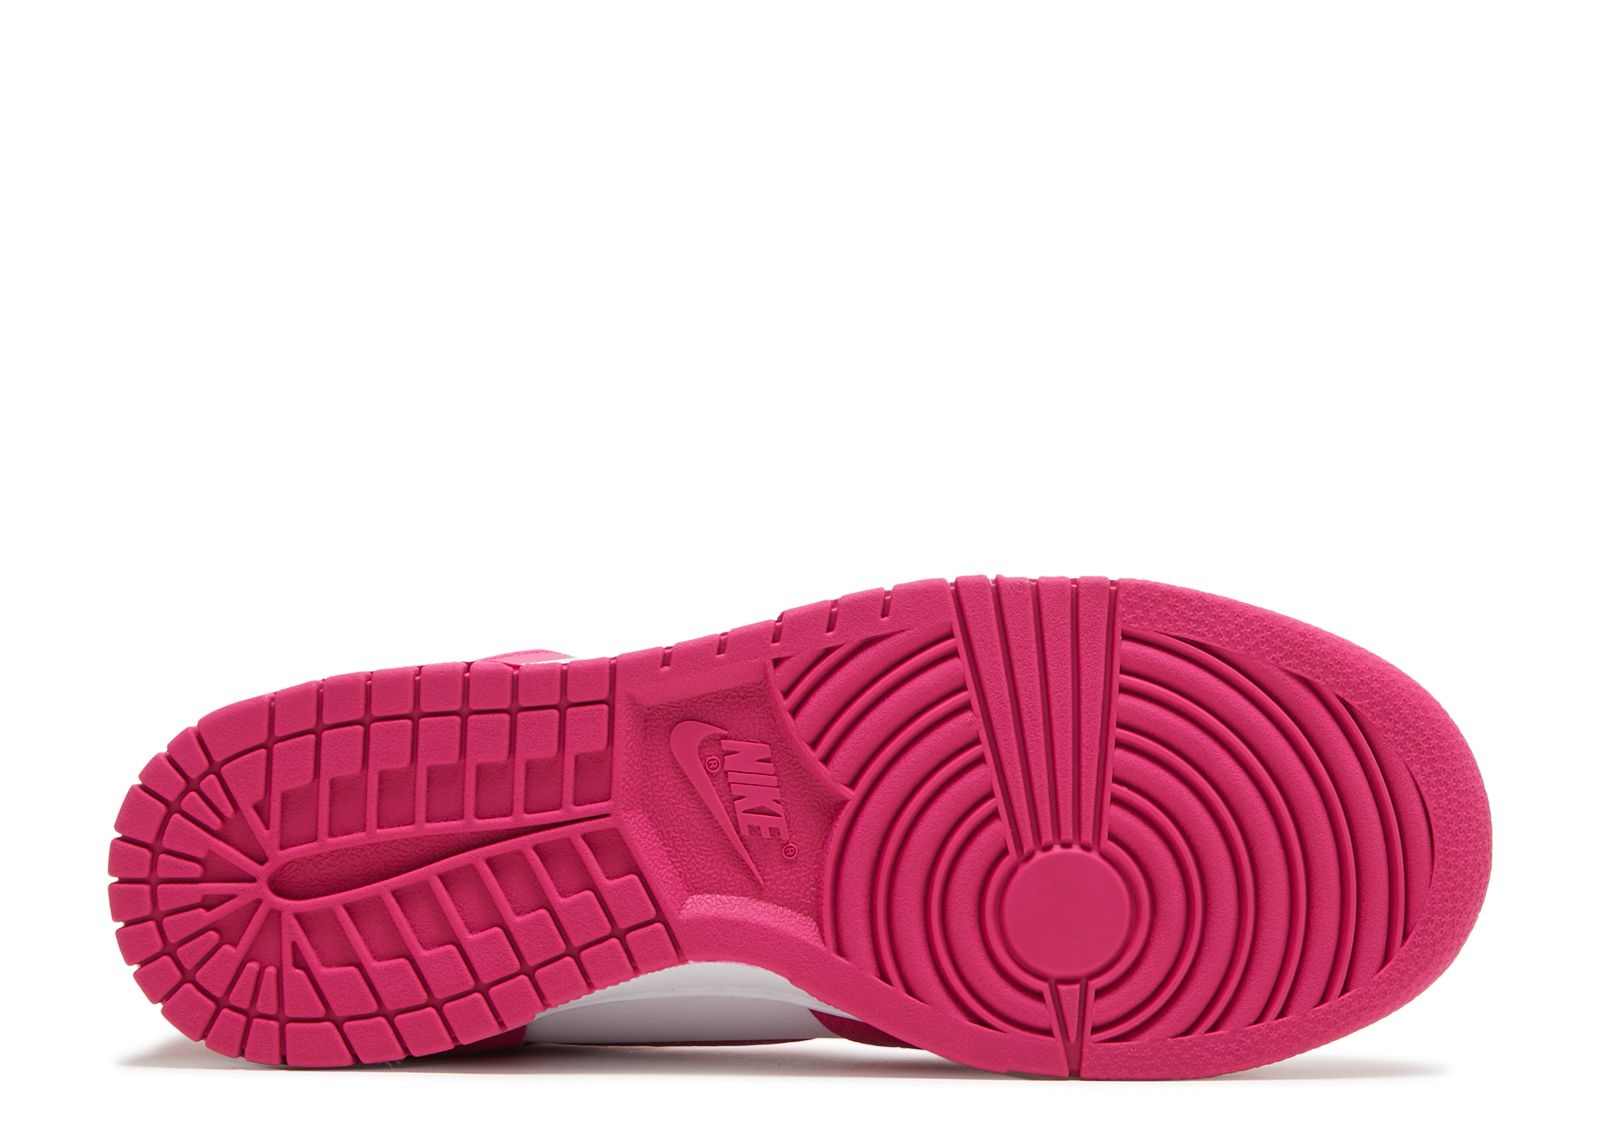 Wmns Dunk High 'Pink Prime' - Nike - DD1869 110 - white/pink prime ...